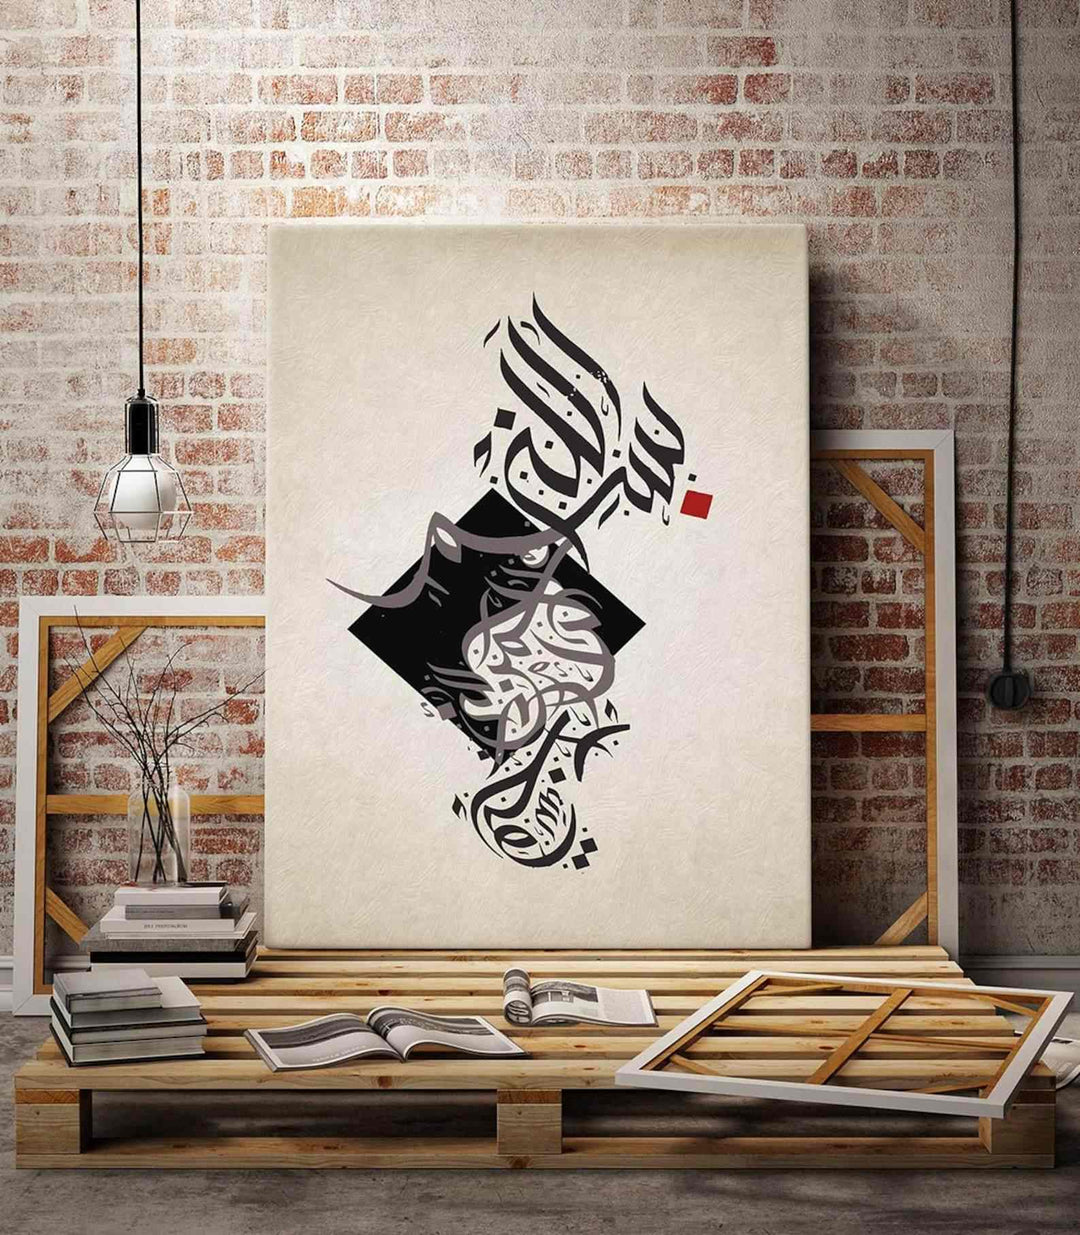 Basmala Modern Calligraphy v2 Oil Paint Reproduction Canvas Print Islamic Wall Art - Islamic Wall Art Store